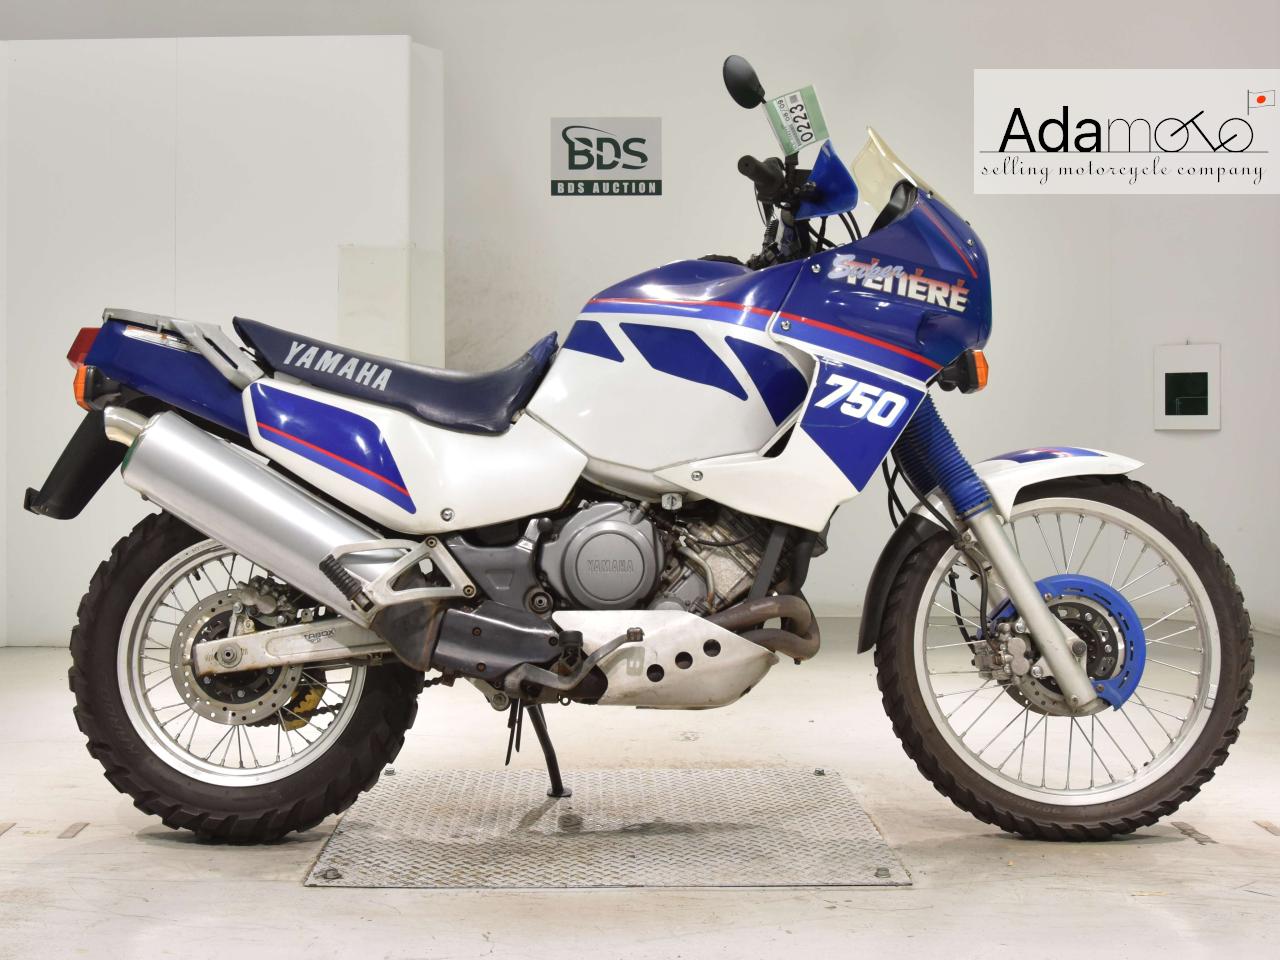 Yamaha XTZ750 SUPER TENERE - Adamoto - Motorcycles from Japan